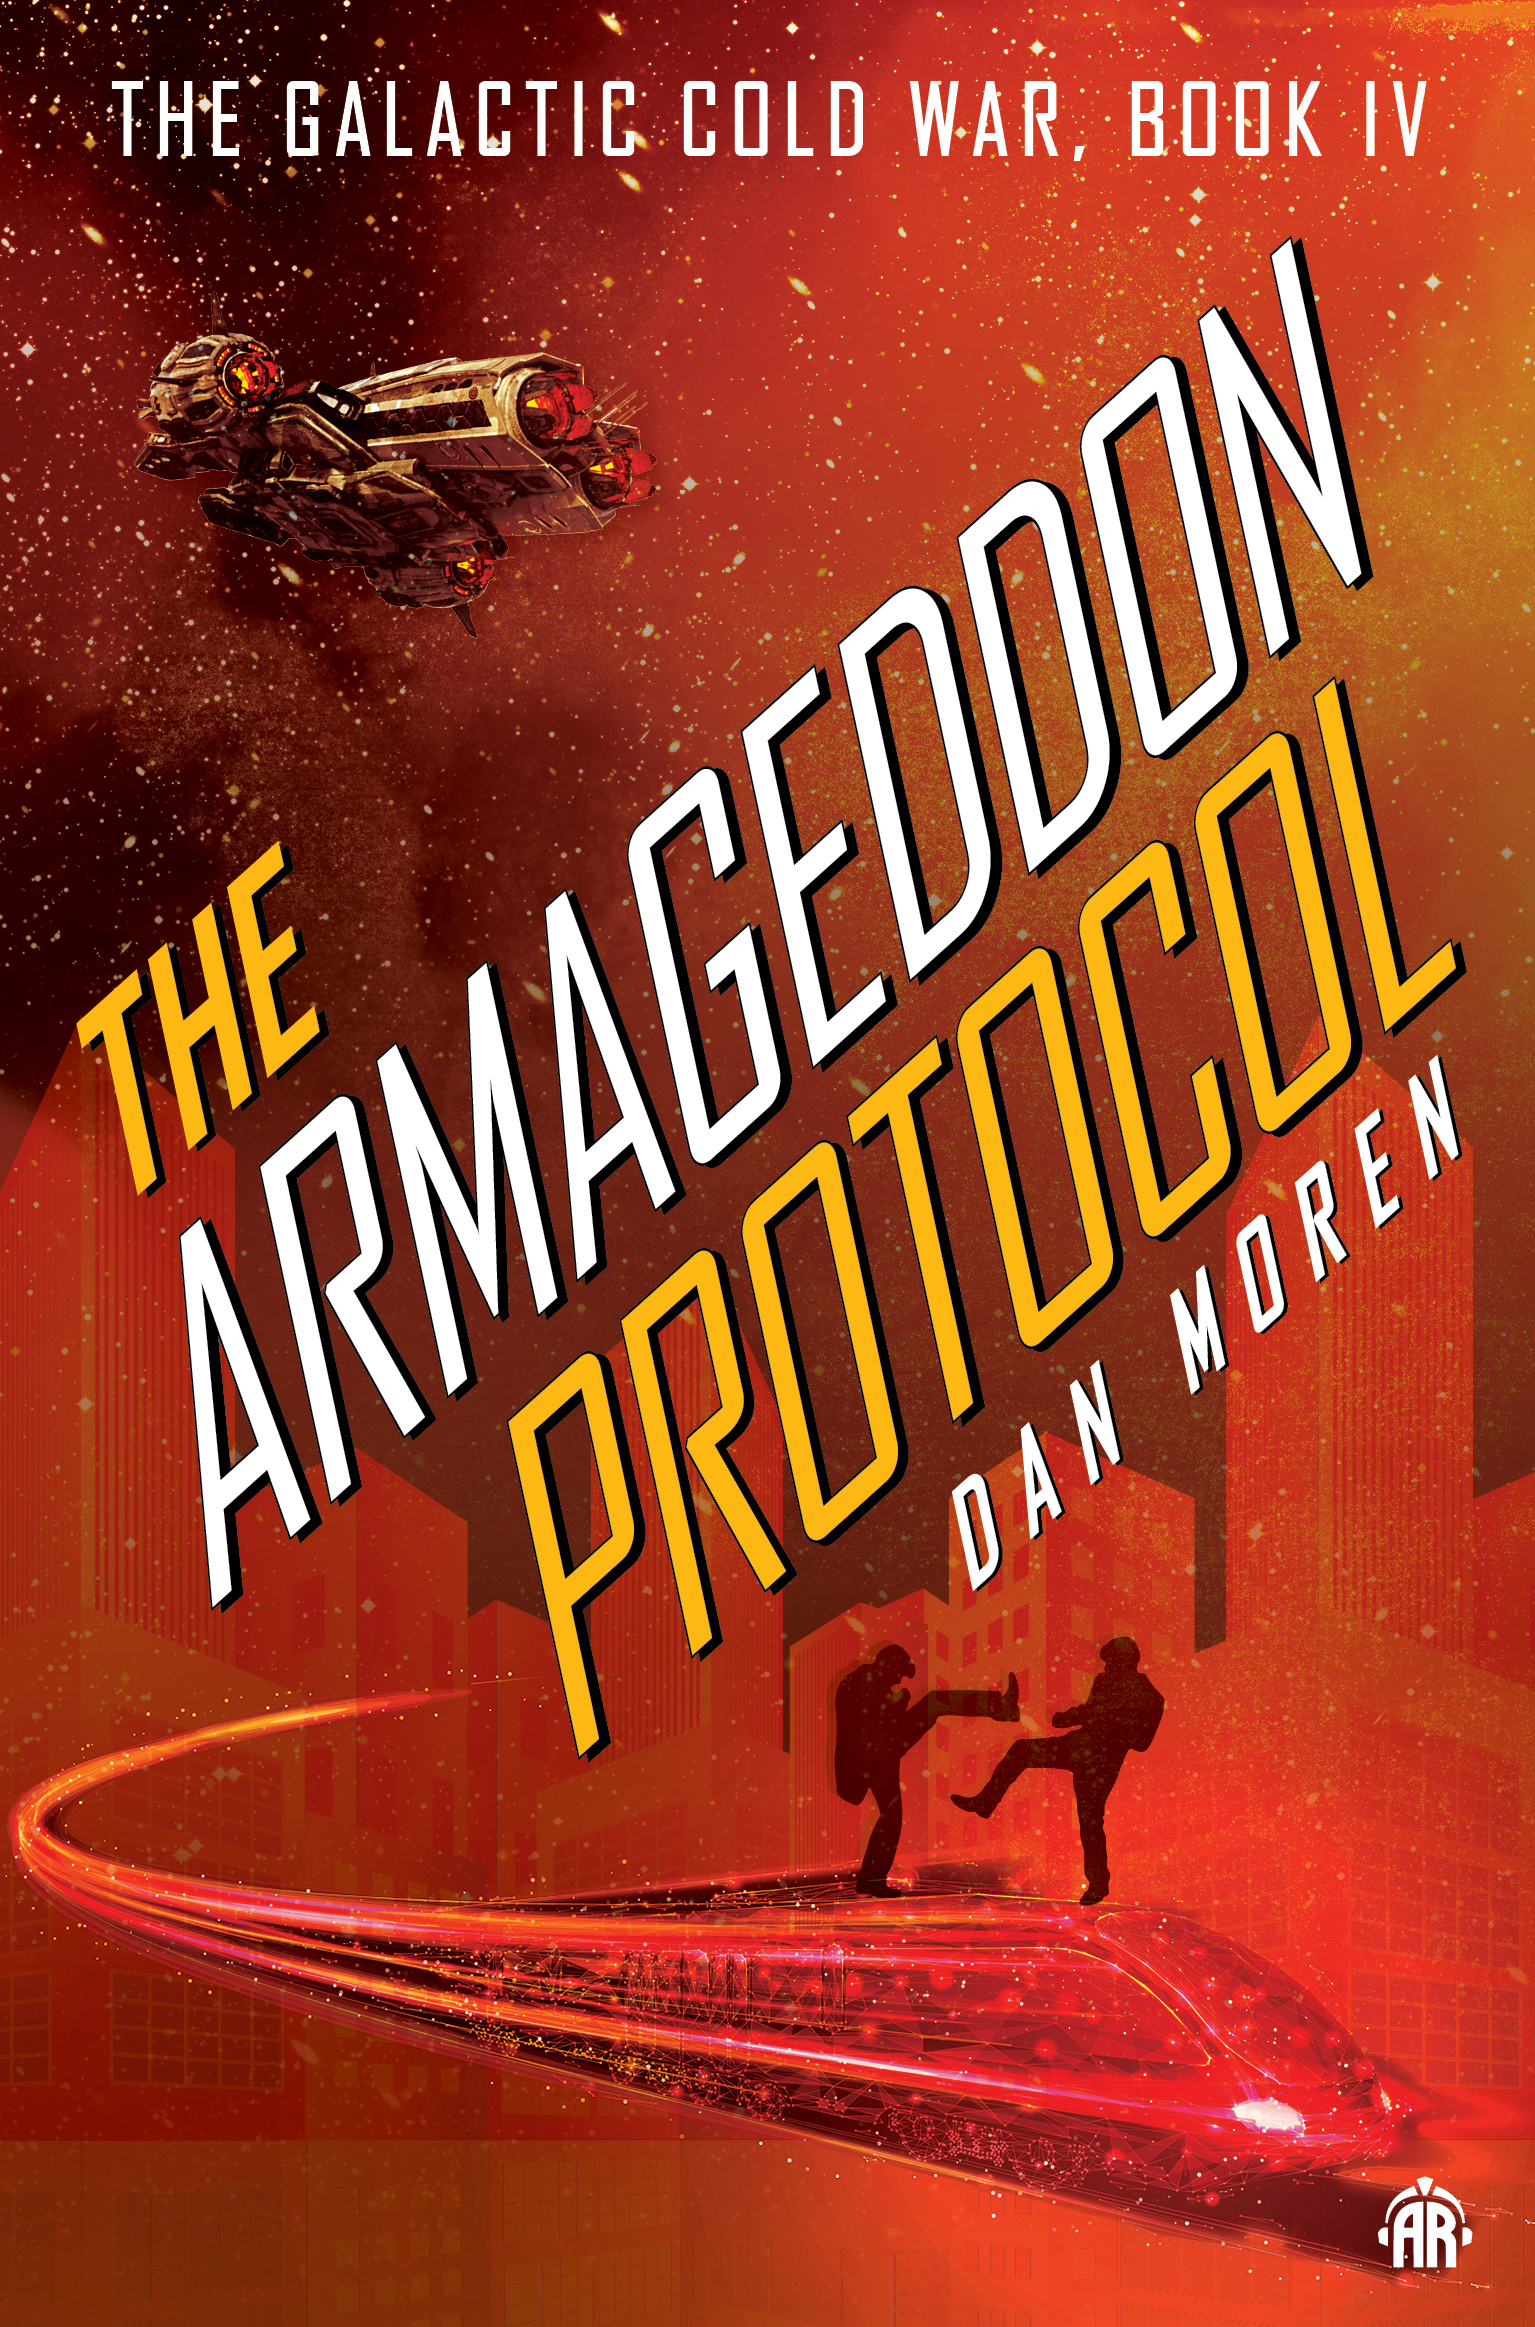 The Armageddon Protocol